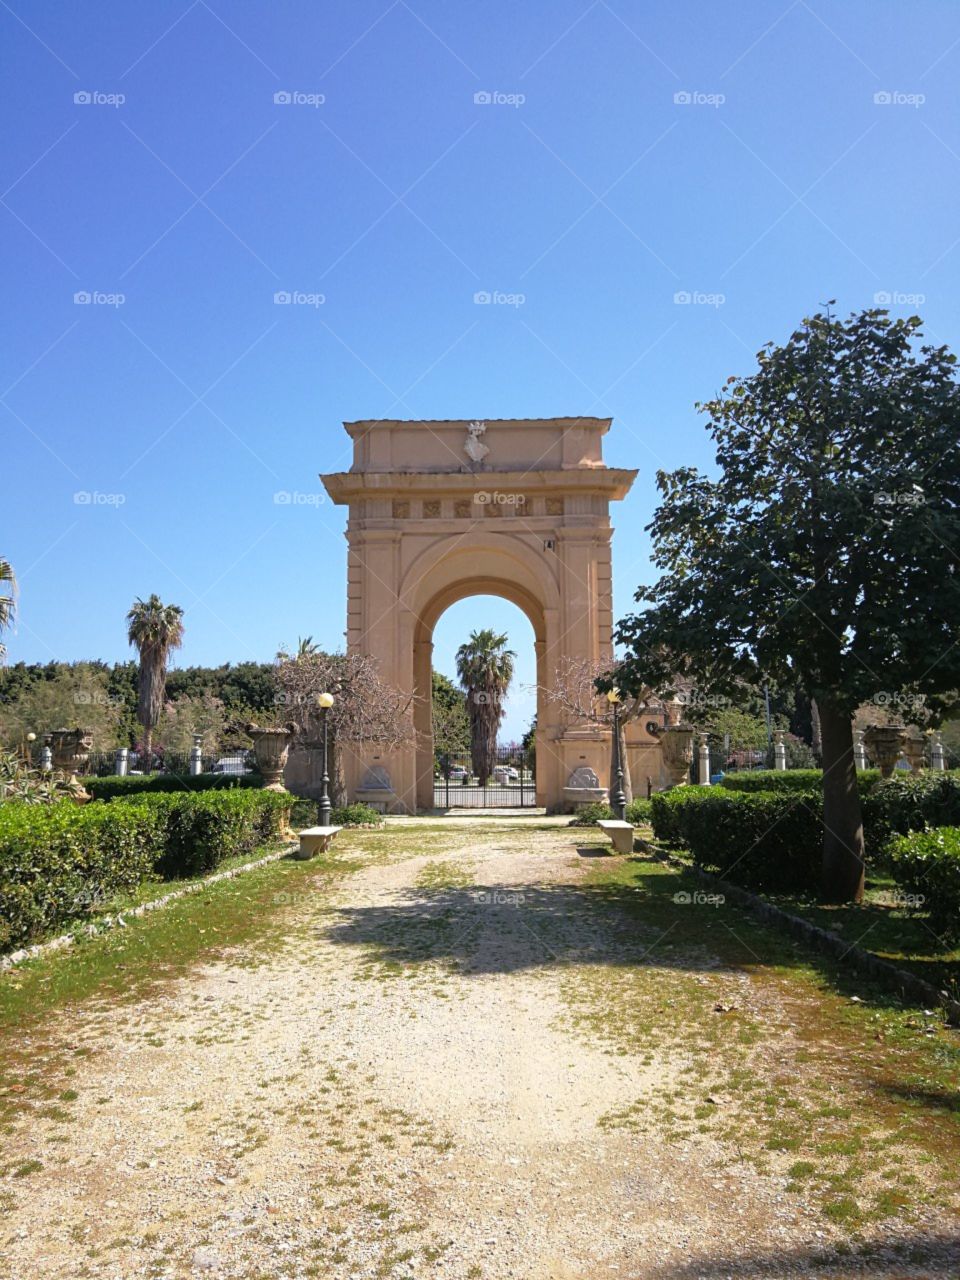 Triumphal arch in Palermo